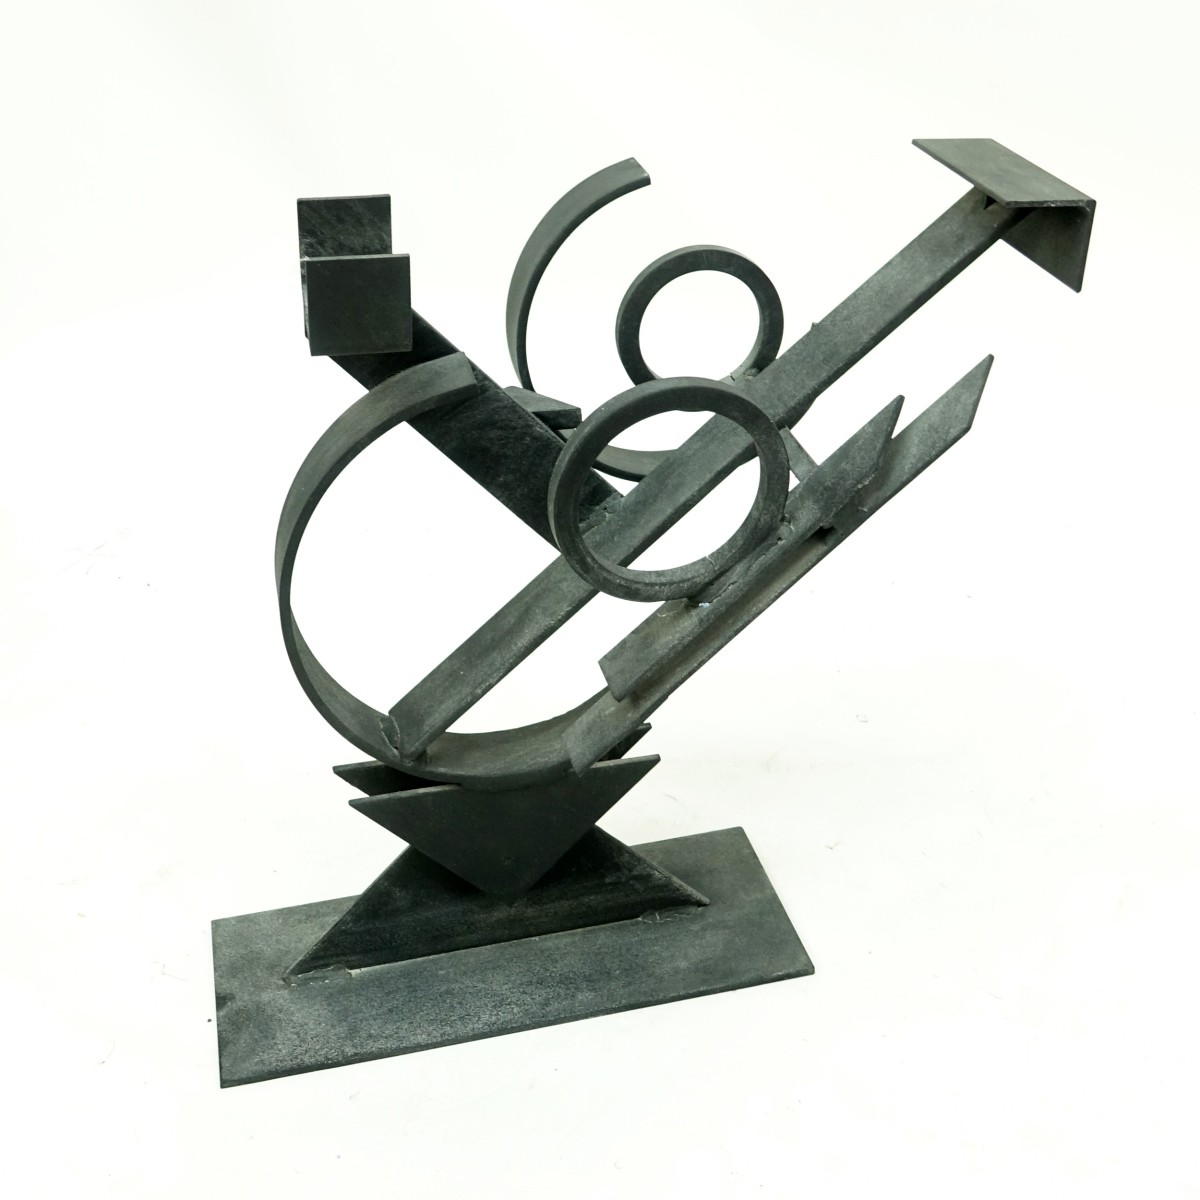 Garcia "Eros" Ironwork Abstract Sculpture